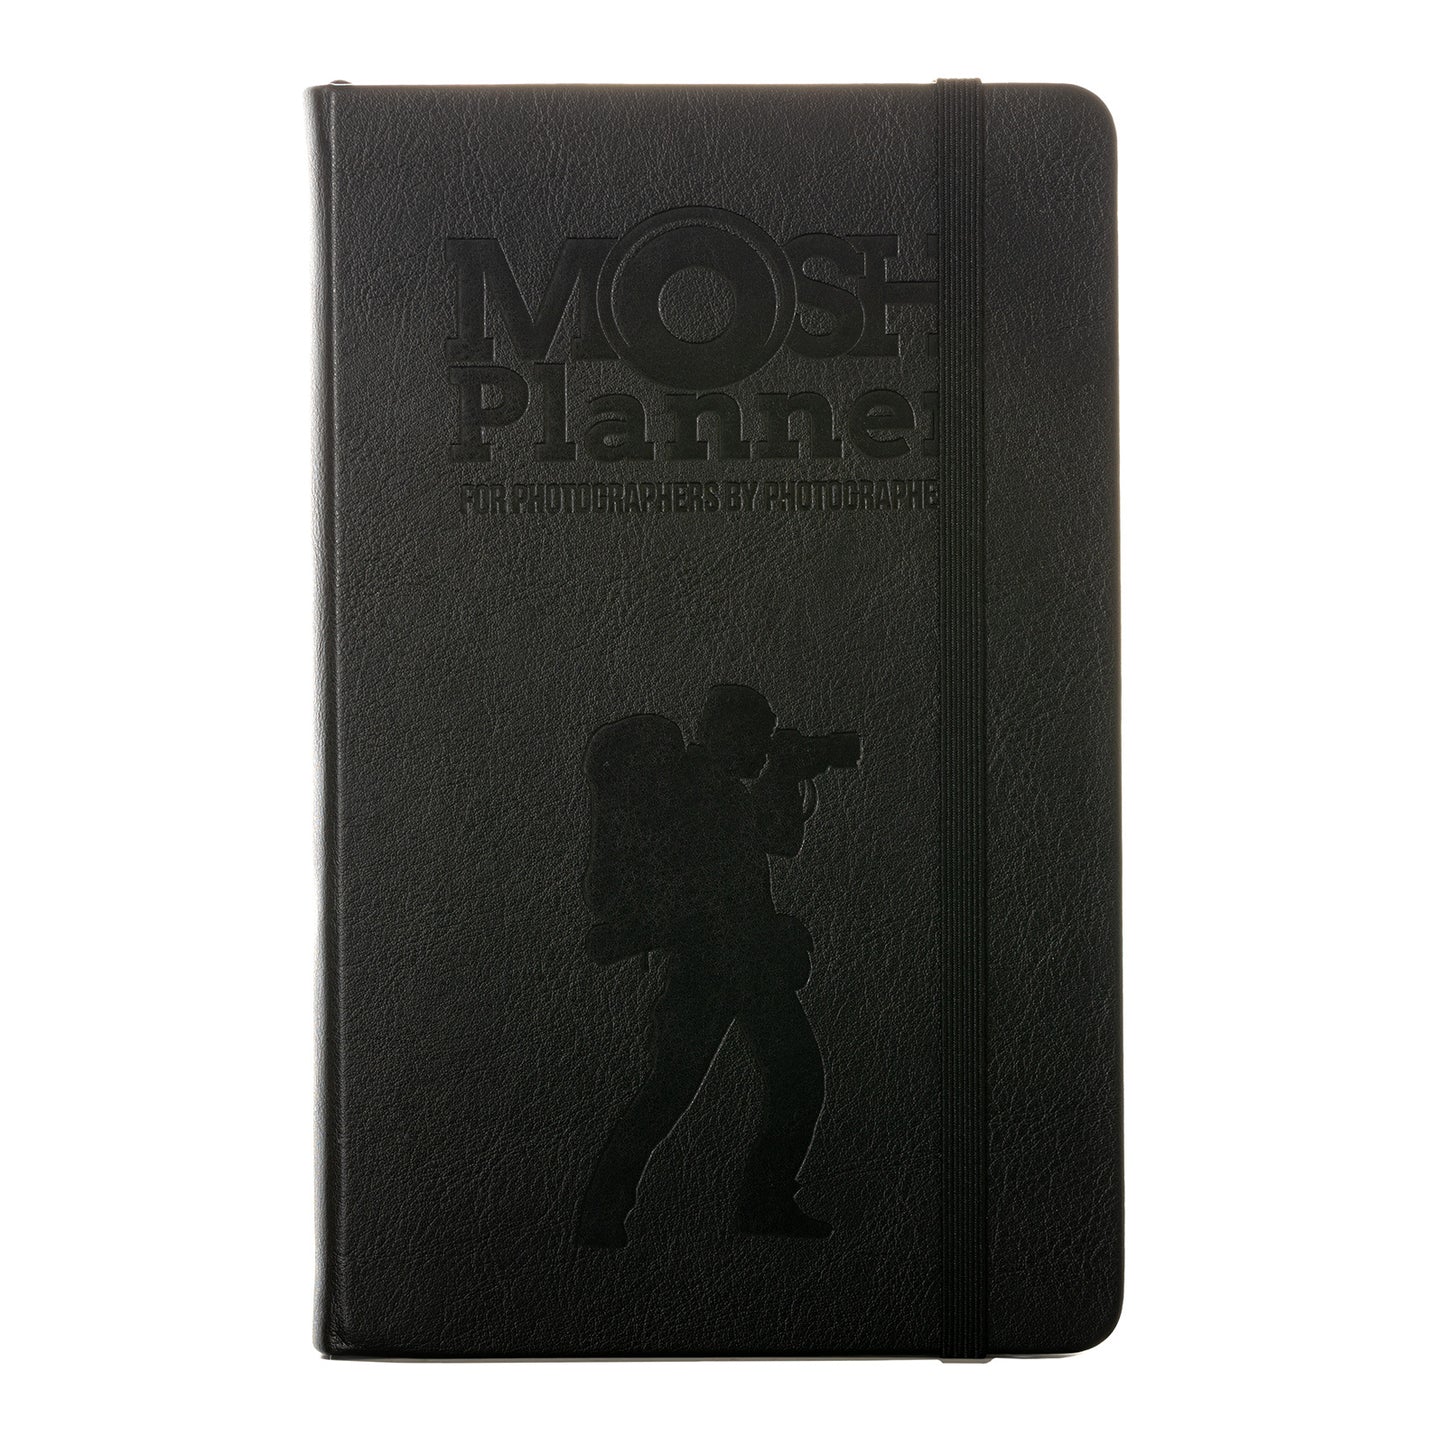 MOSH Planner Pro